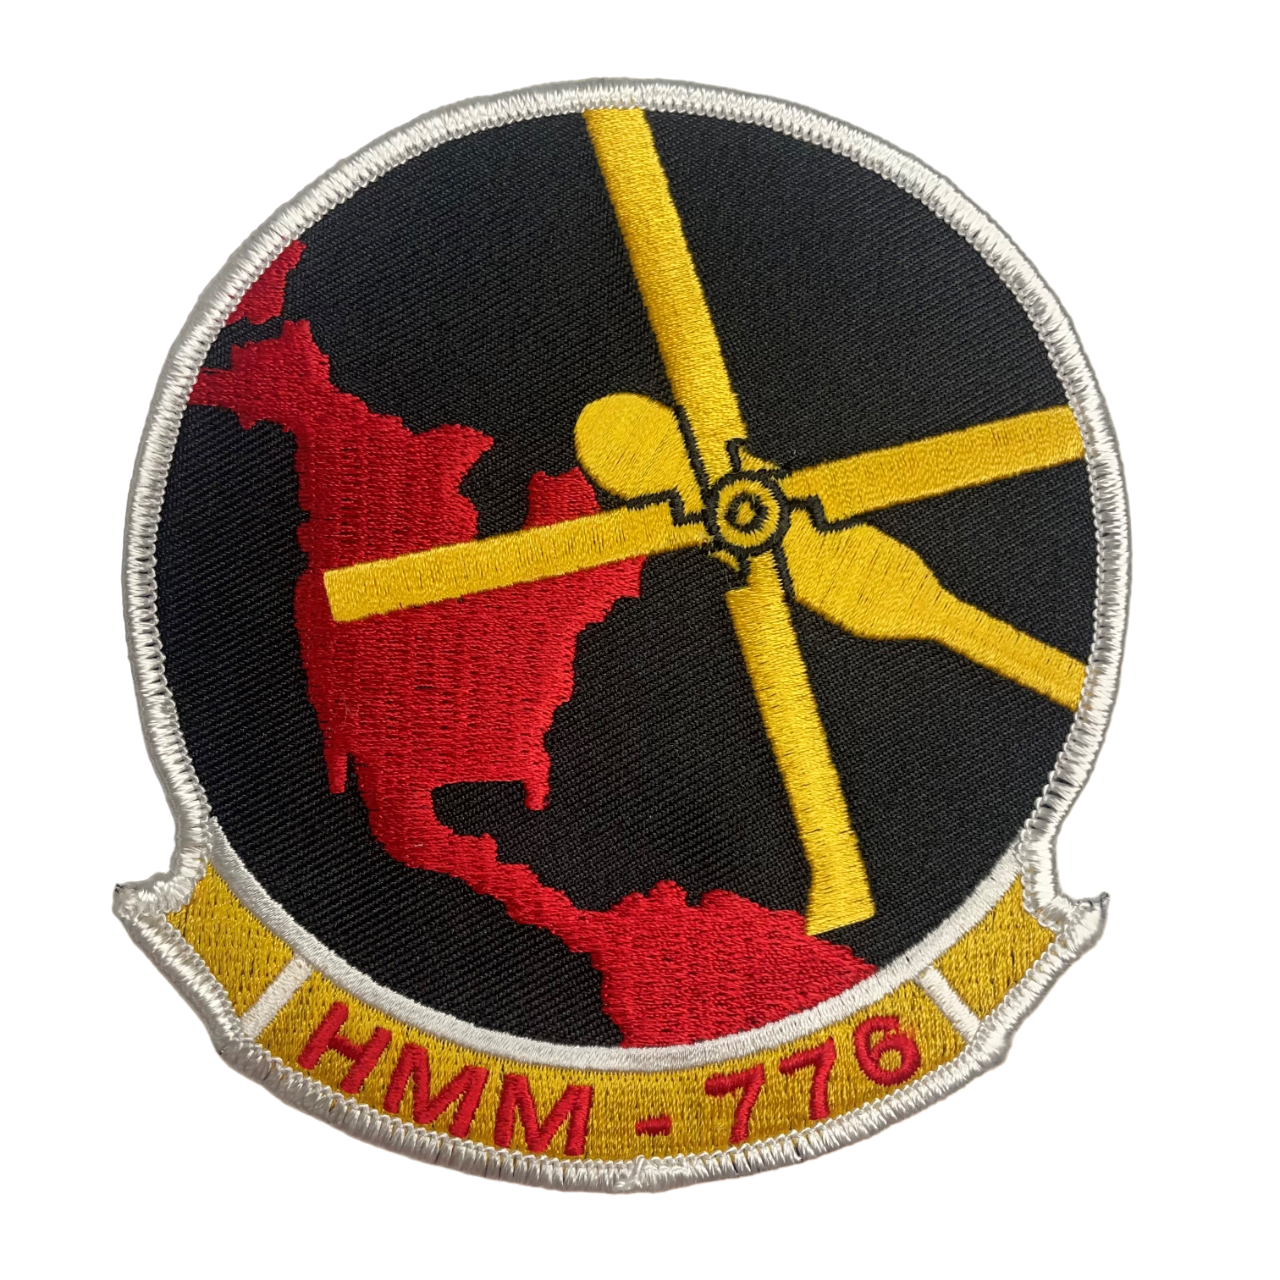 HMM-776 Squadron - USMC Licensed Patch